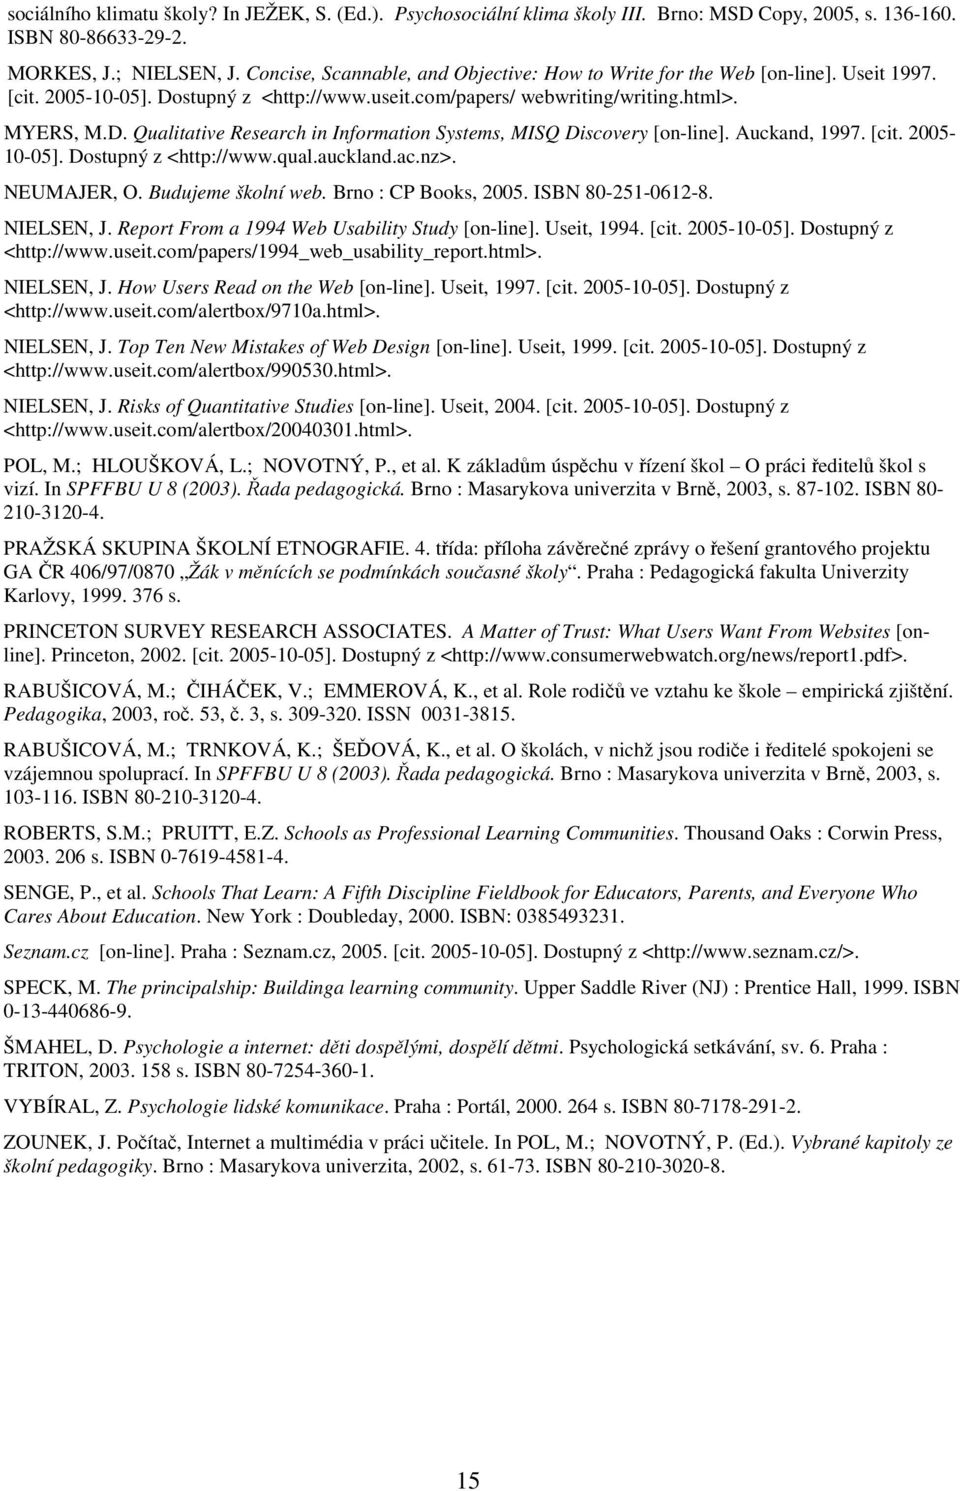 Auckand, 1997. [cit. 2005-10-05]. Dostupný z <http://www.qual.auckland.ac.nz>. NEUMAJER, O. Budujeme školní web. Brno : CP Books, 2005. ISBN 80-251-0612-8. NIELSEN, J.